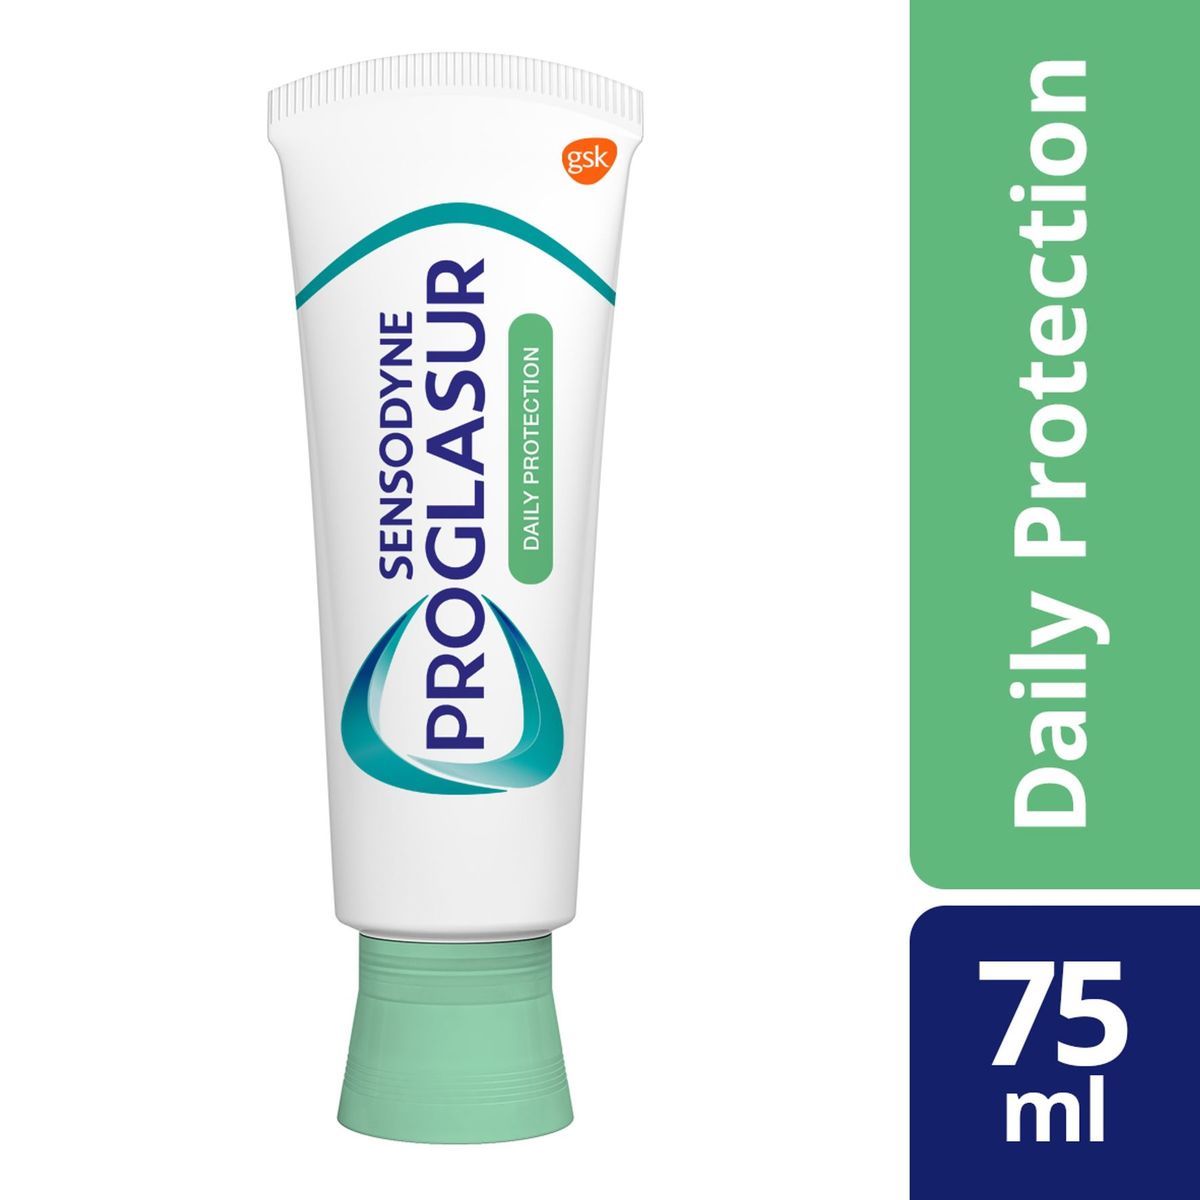 Sensodyne Proglasur Dentifrice Daily Protection protection émail 75 ml